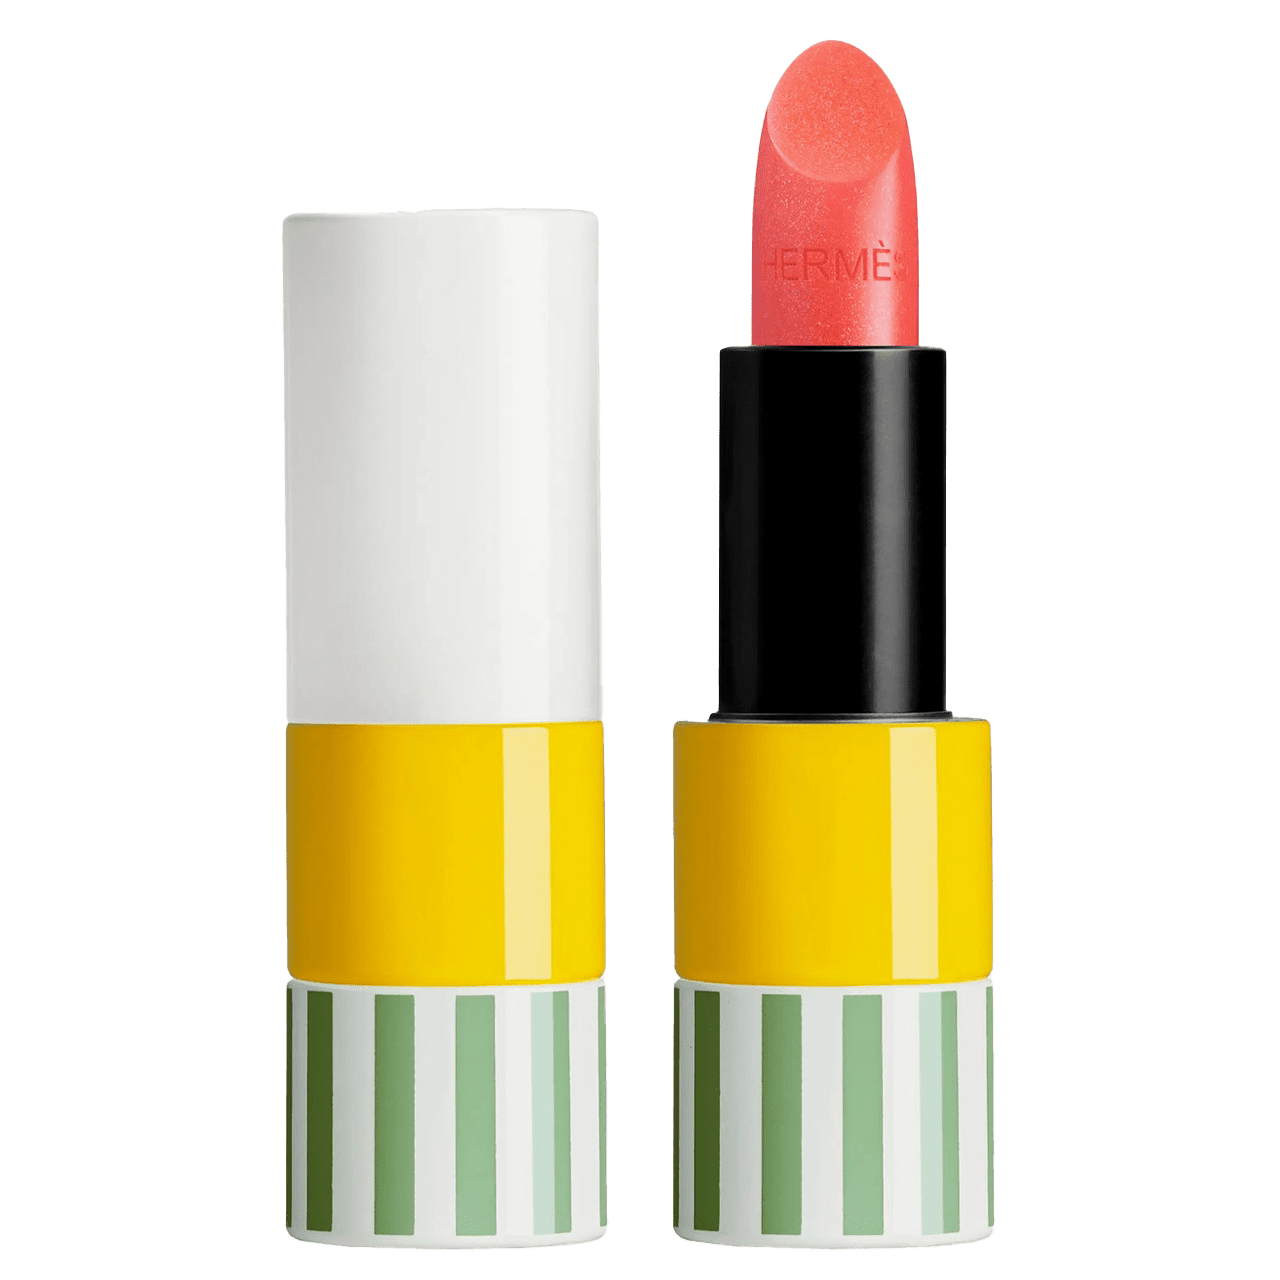 Hermès shiny lipstick